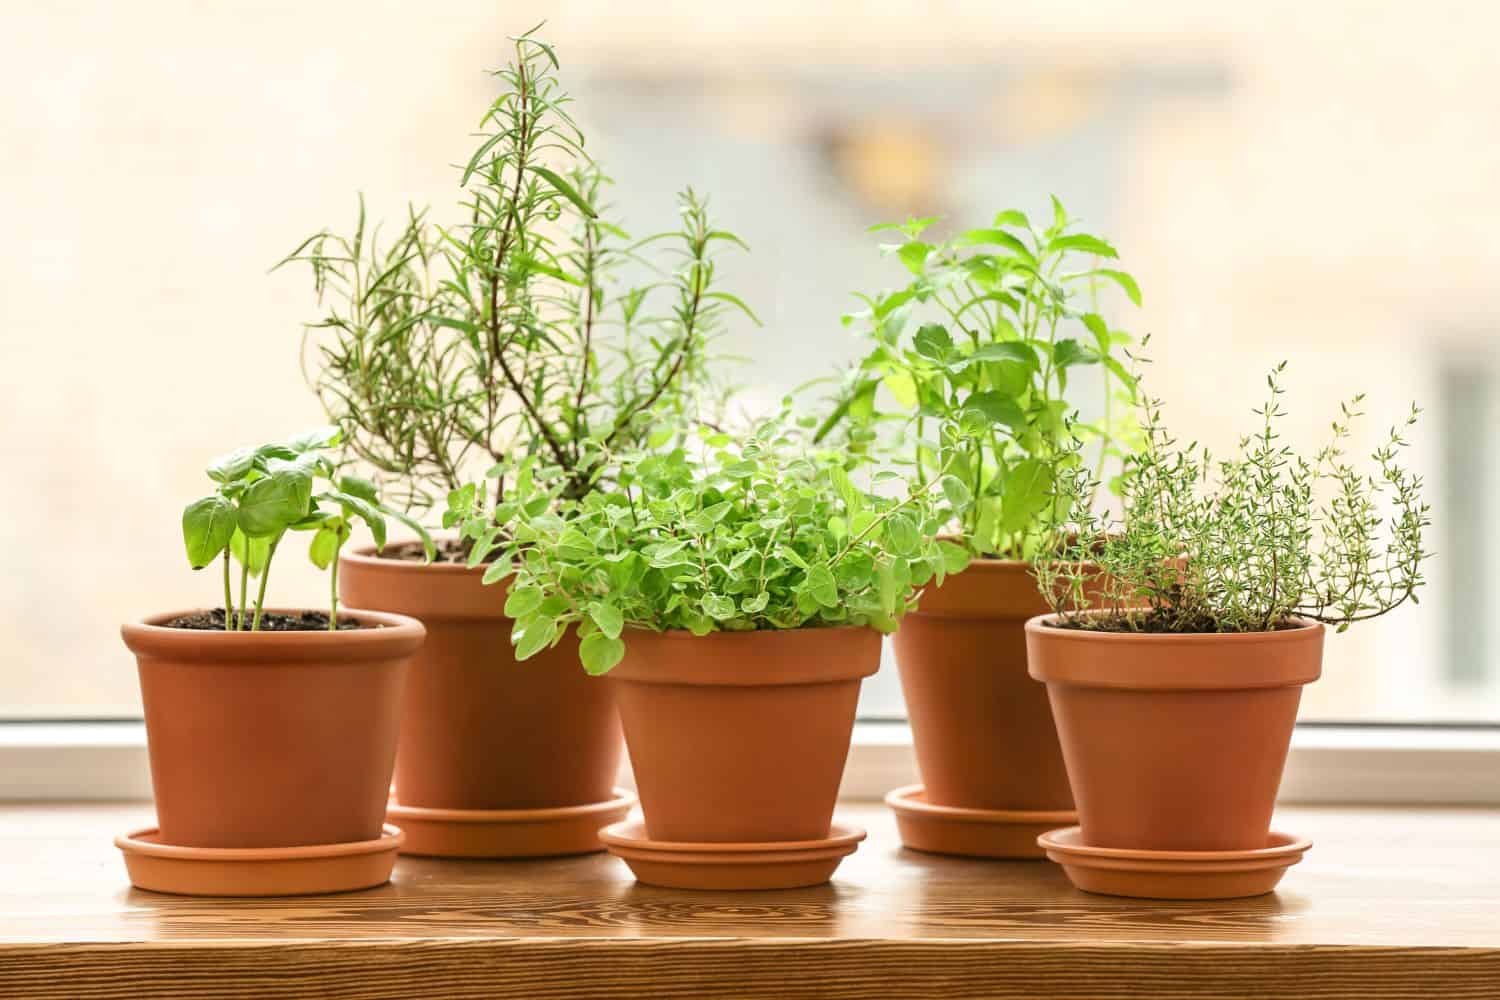 Windowsill Herb Garden: Best Plants and Growing Tips